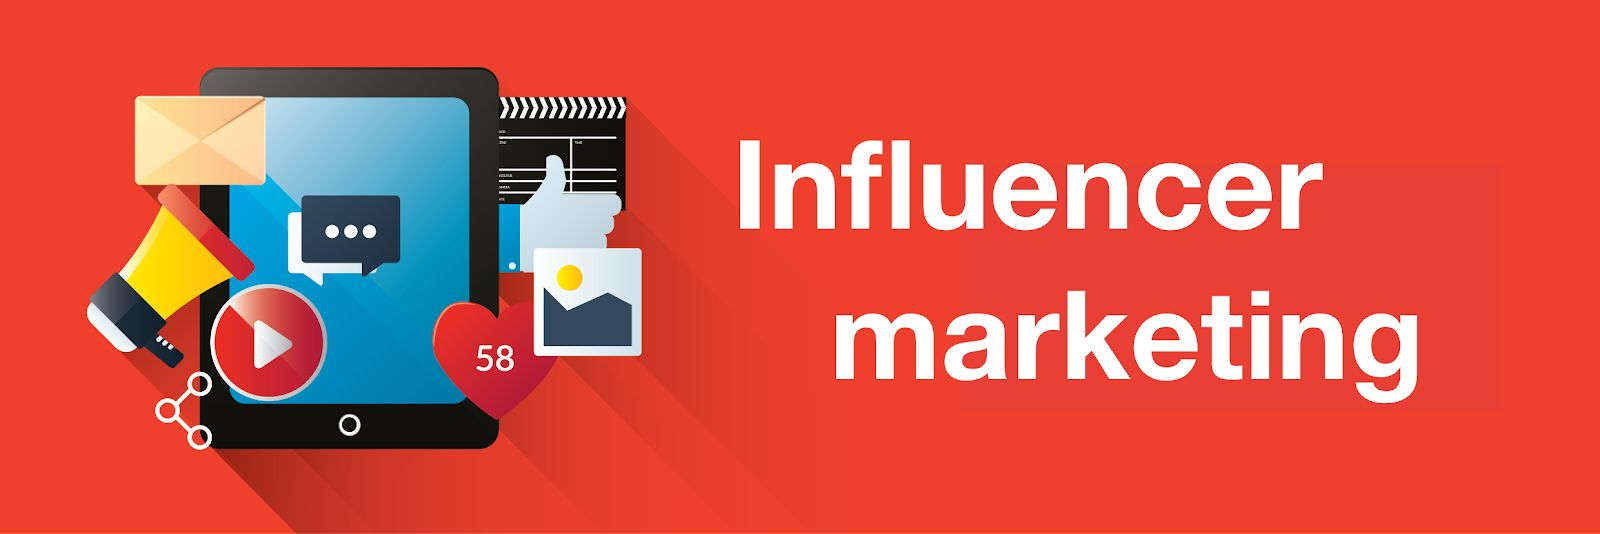 BuySocialMediaMarketing blog - Influencer marketing